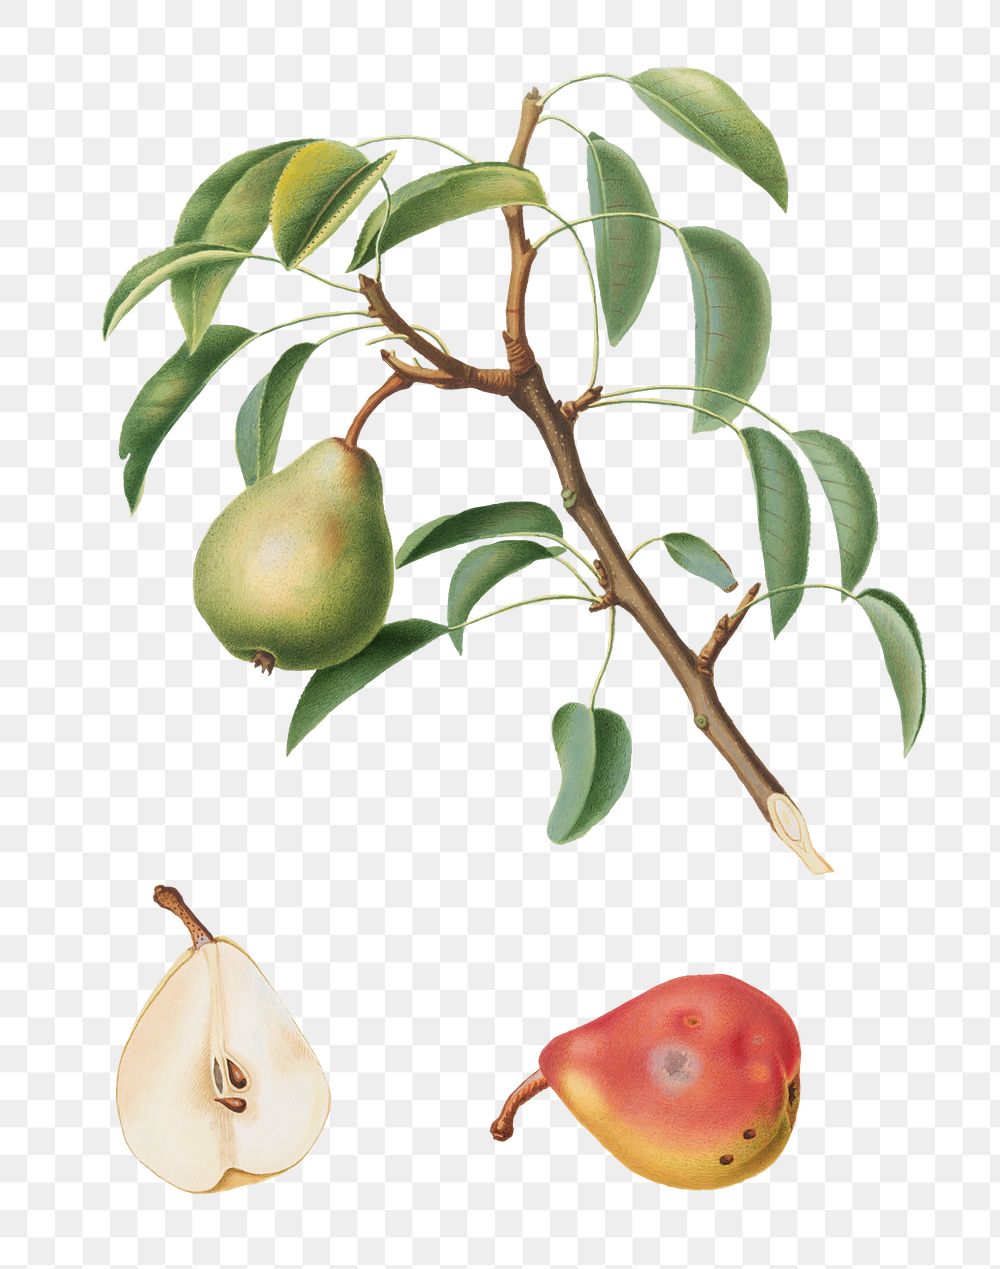 Hand drawn pear fruit design element